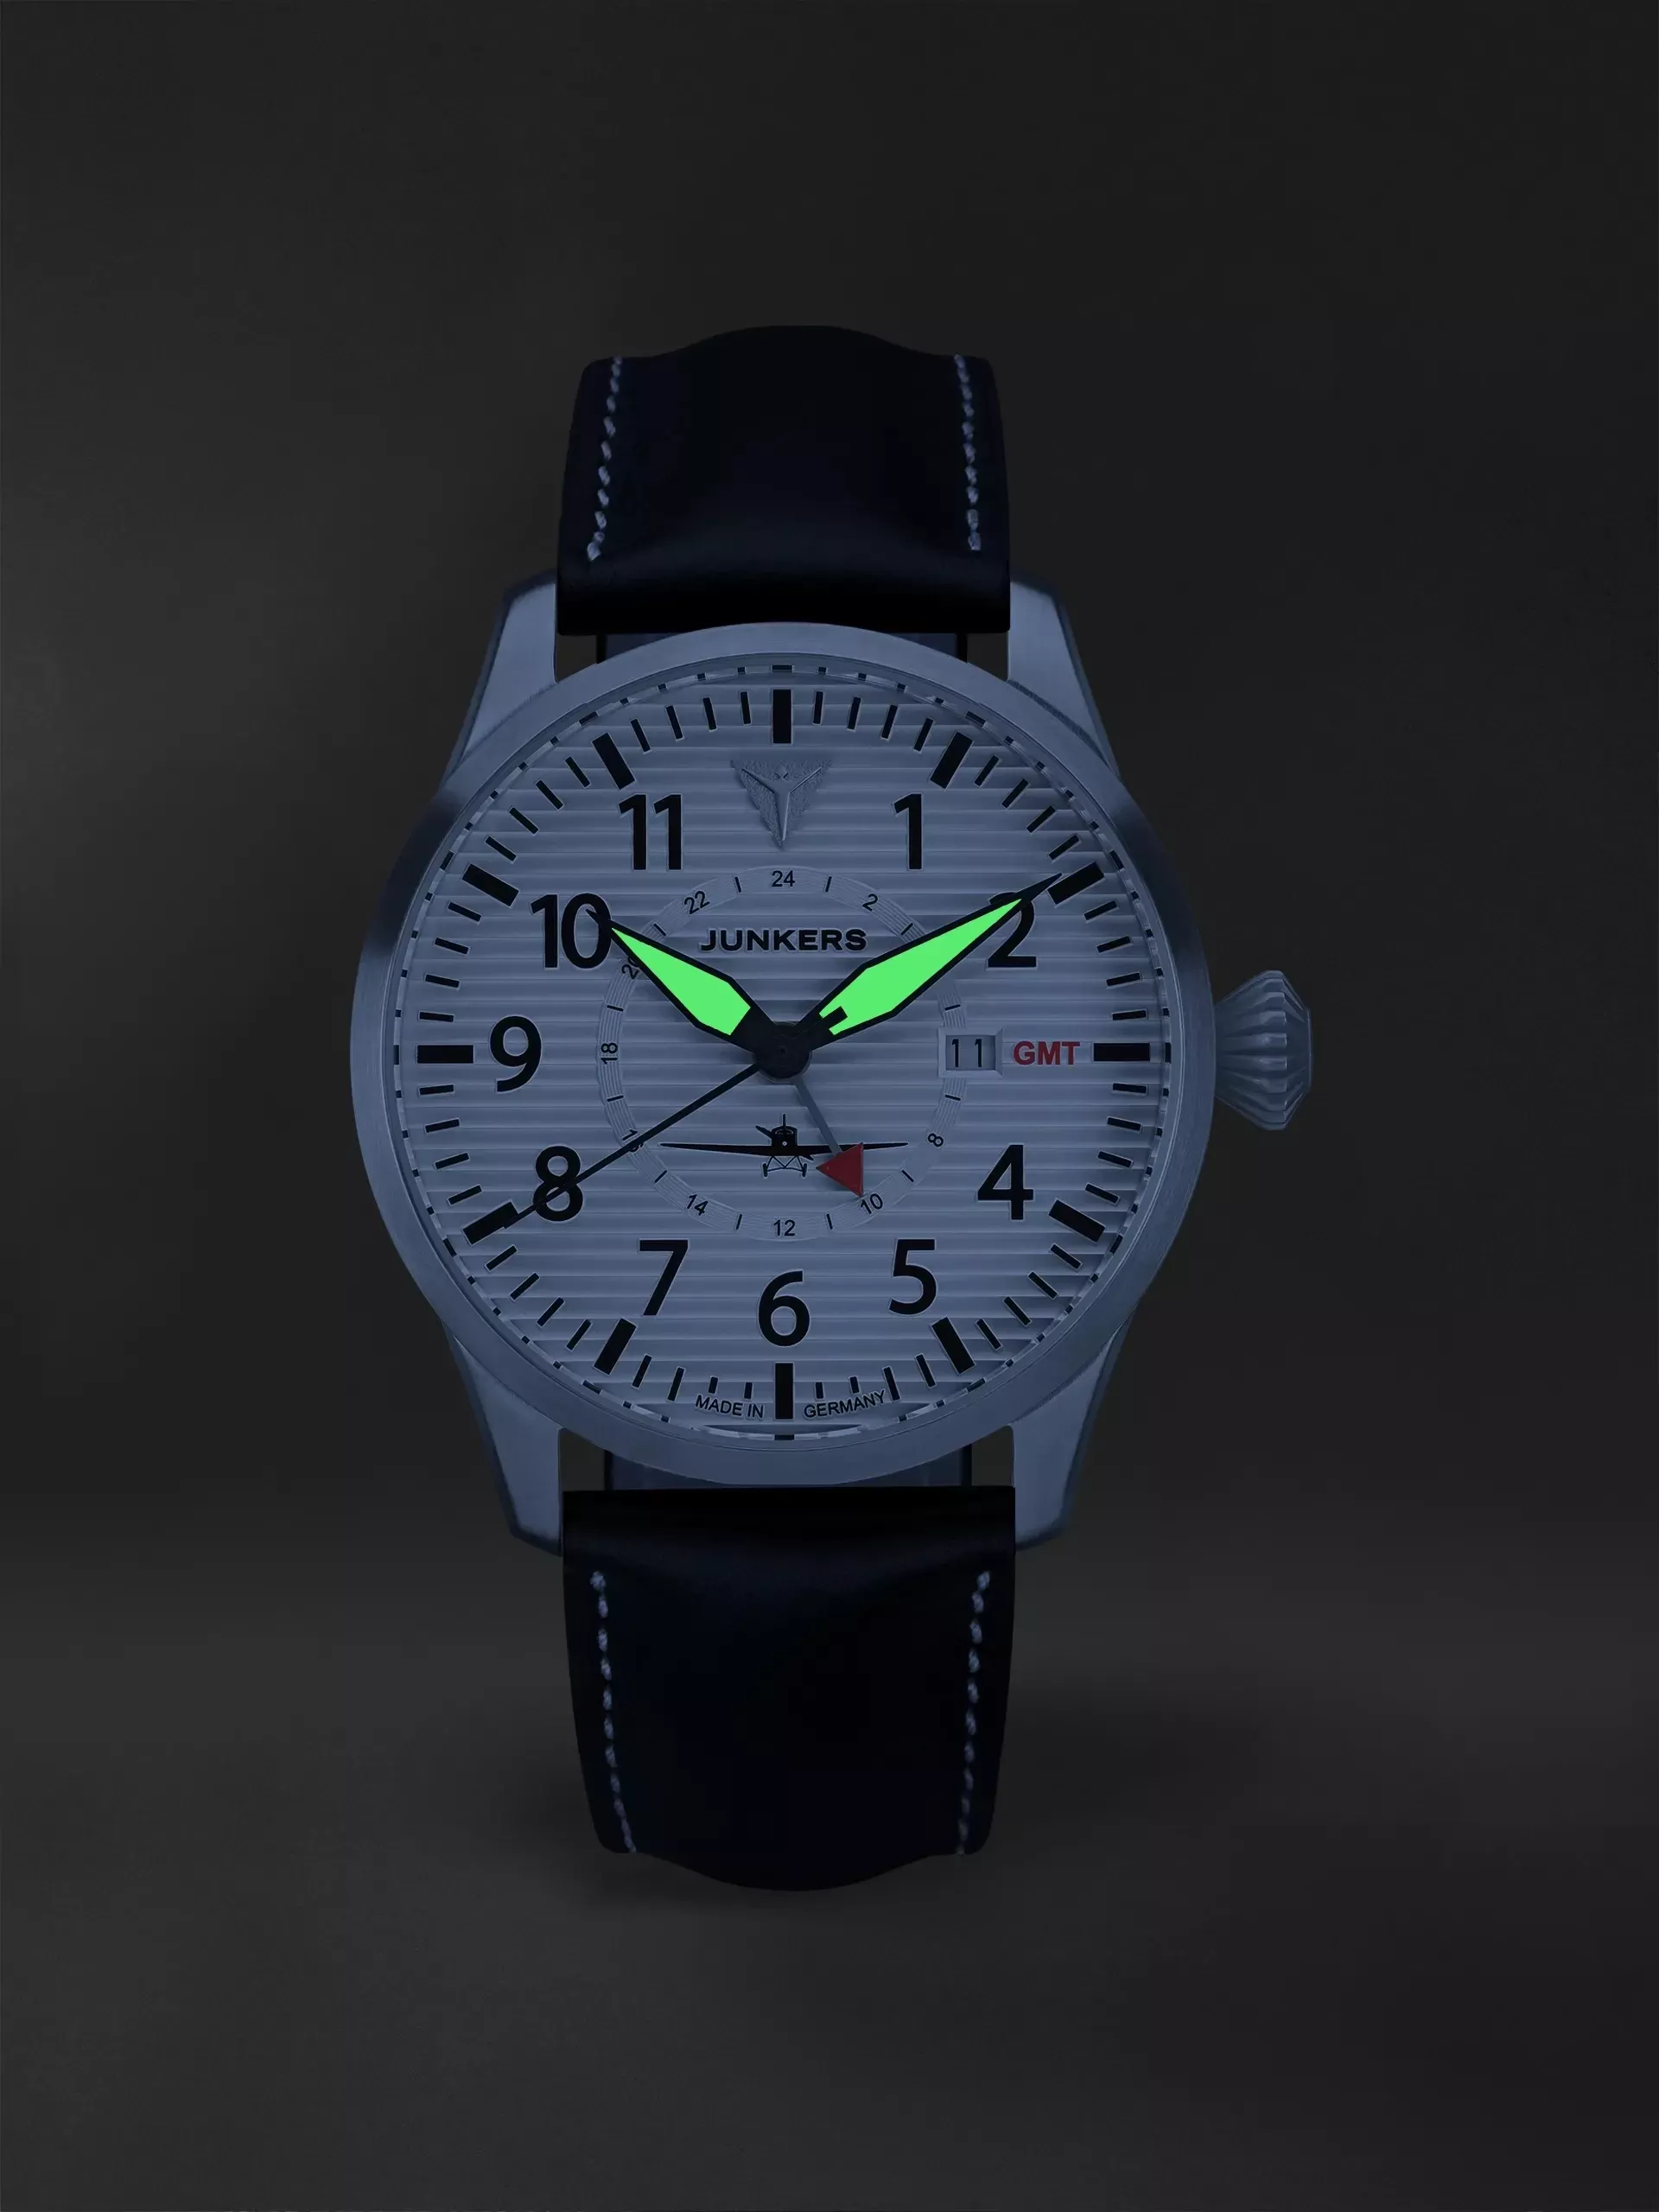 Junkers Herren Armbanduhr 9.53.01.03 Flieger GMT Lederband schwarz